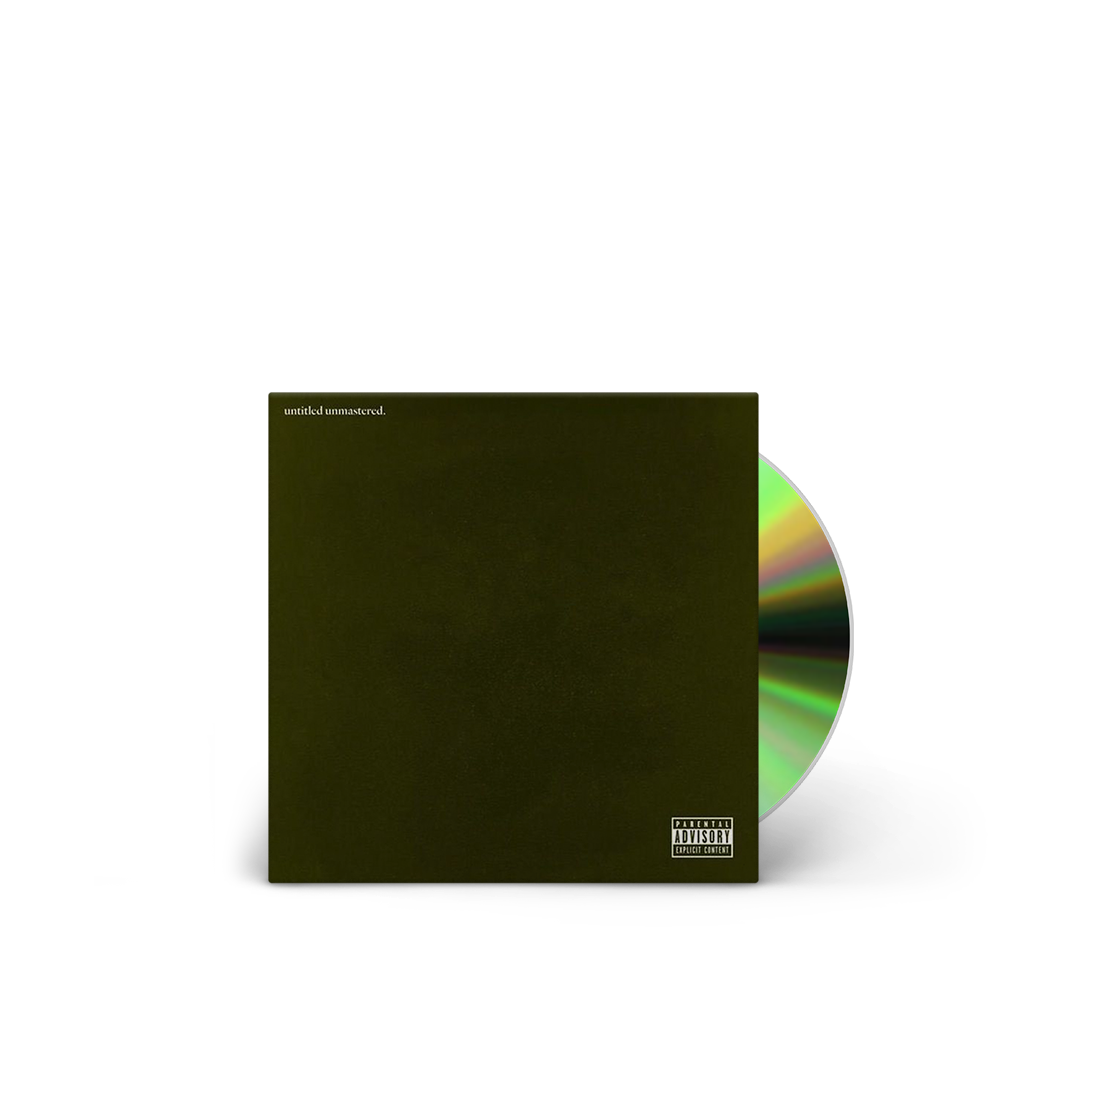 Kendrick Lamar - untitled unmastered: CD